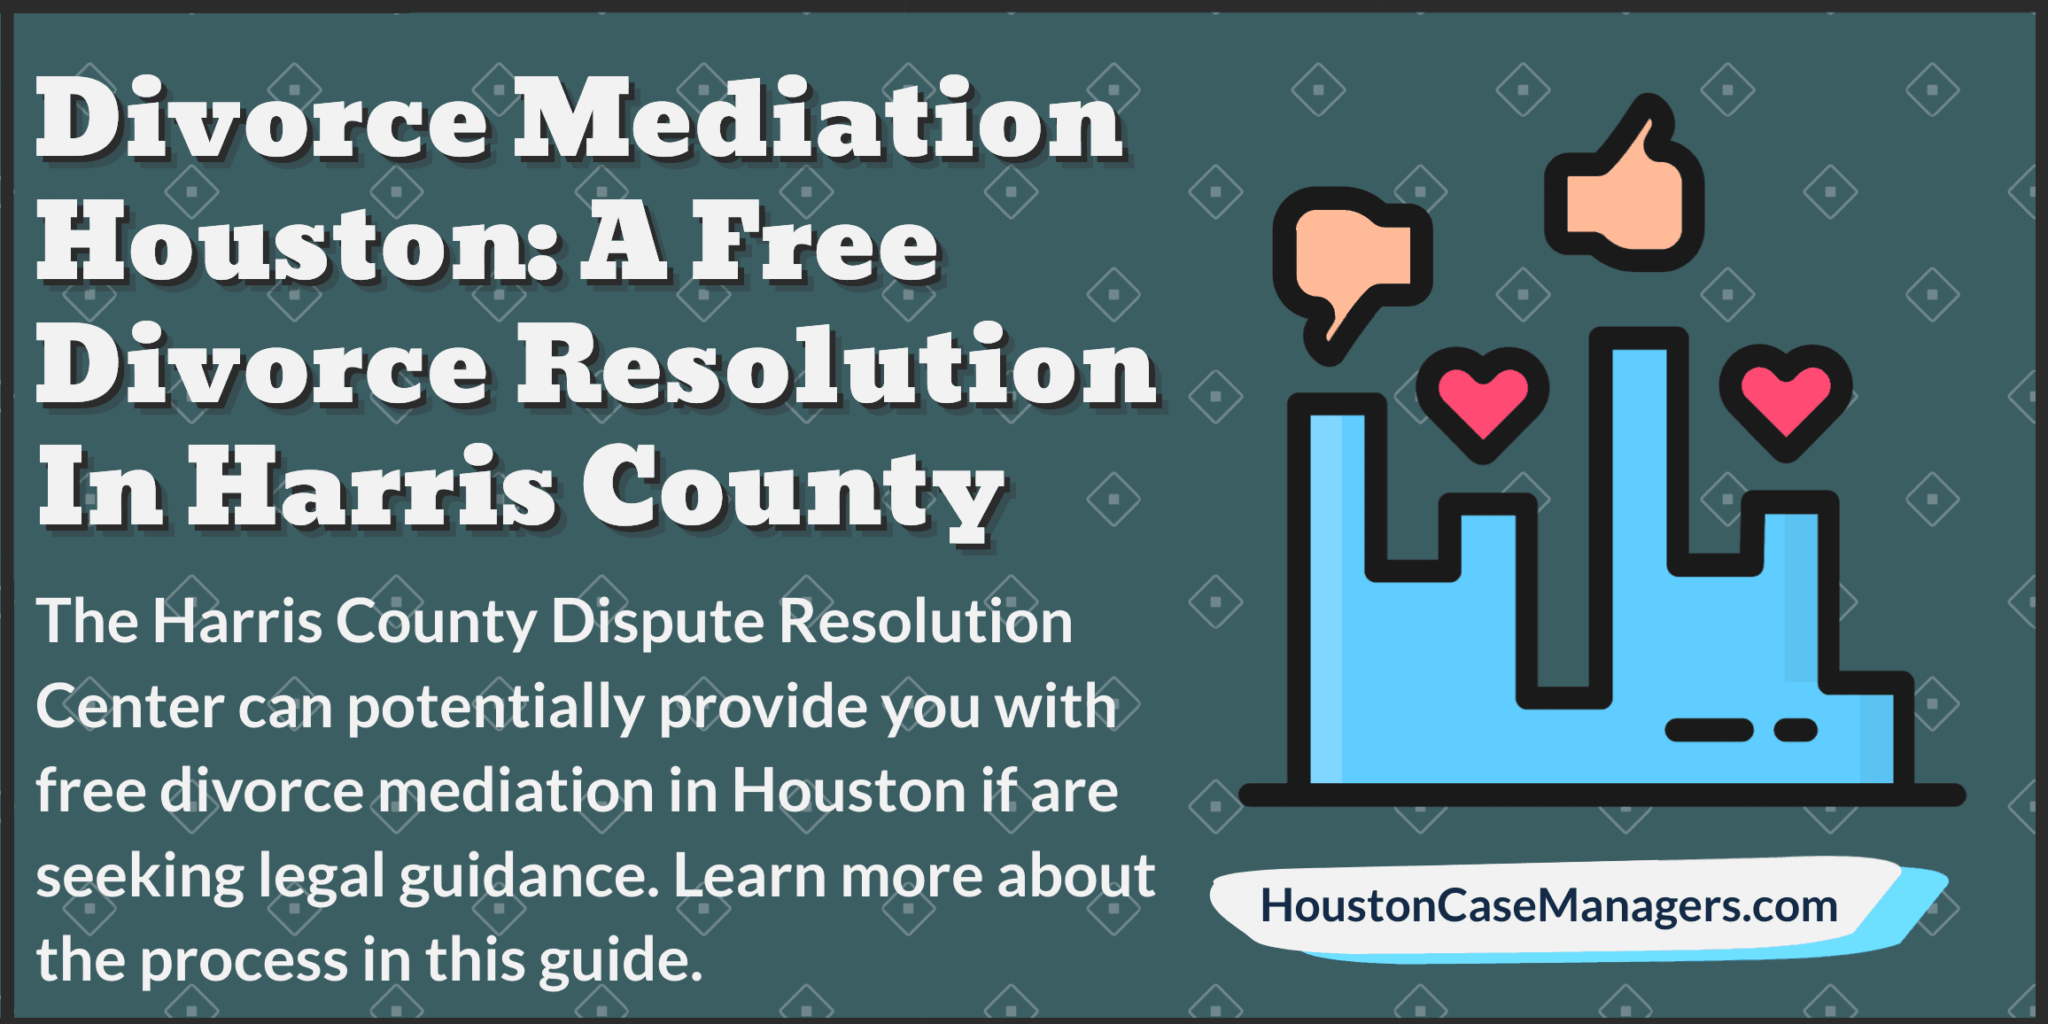 Divorce Mediation Houston A Free Divorce Resolution In Harris County